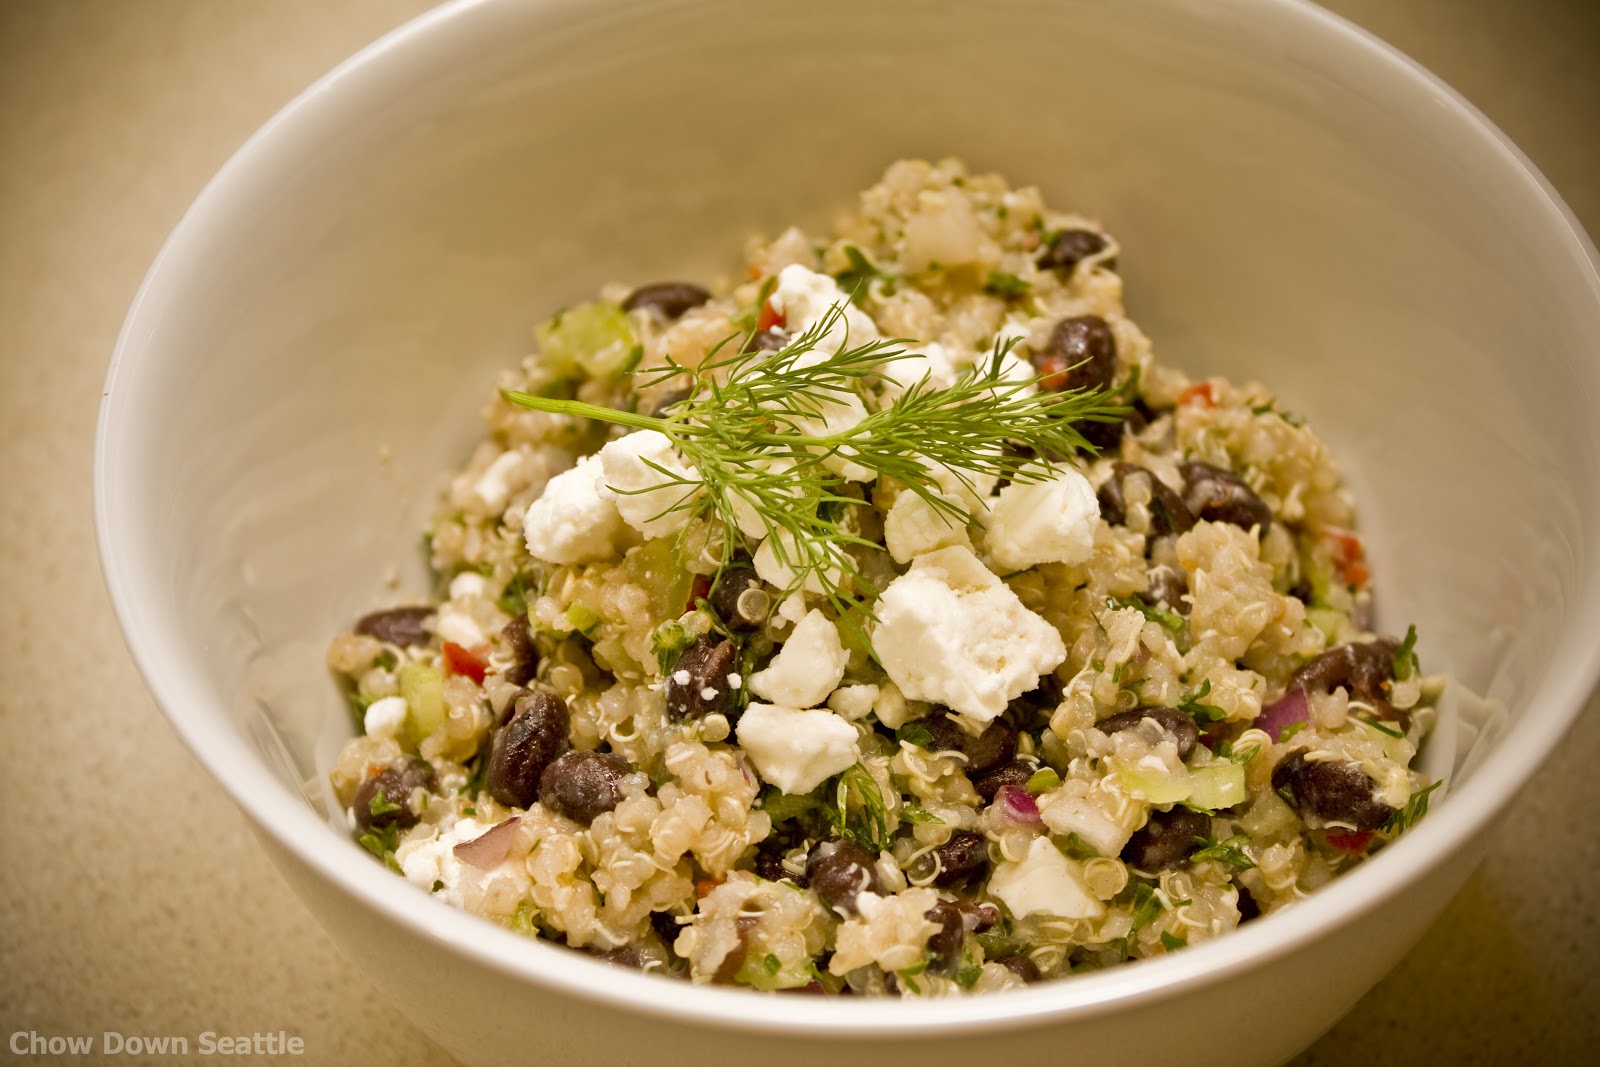 Chow Down Seattle: RECIPE: Quinoa Salad